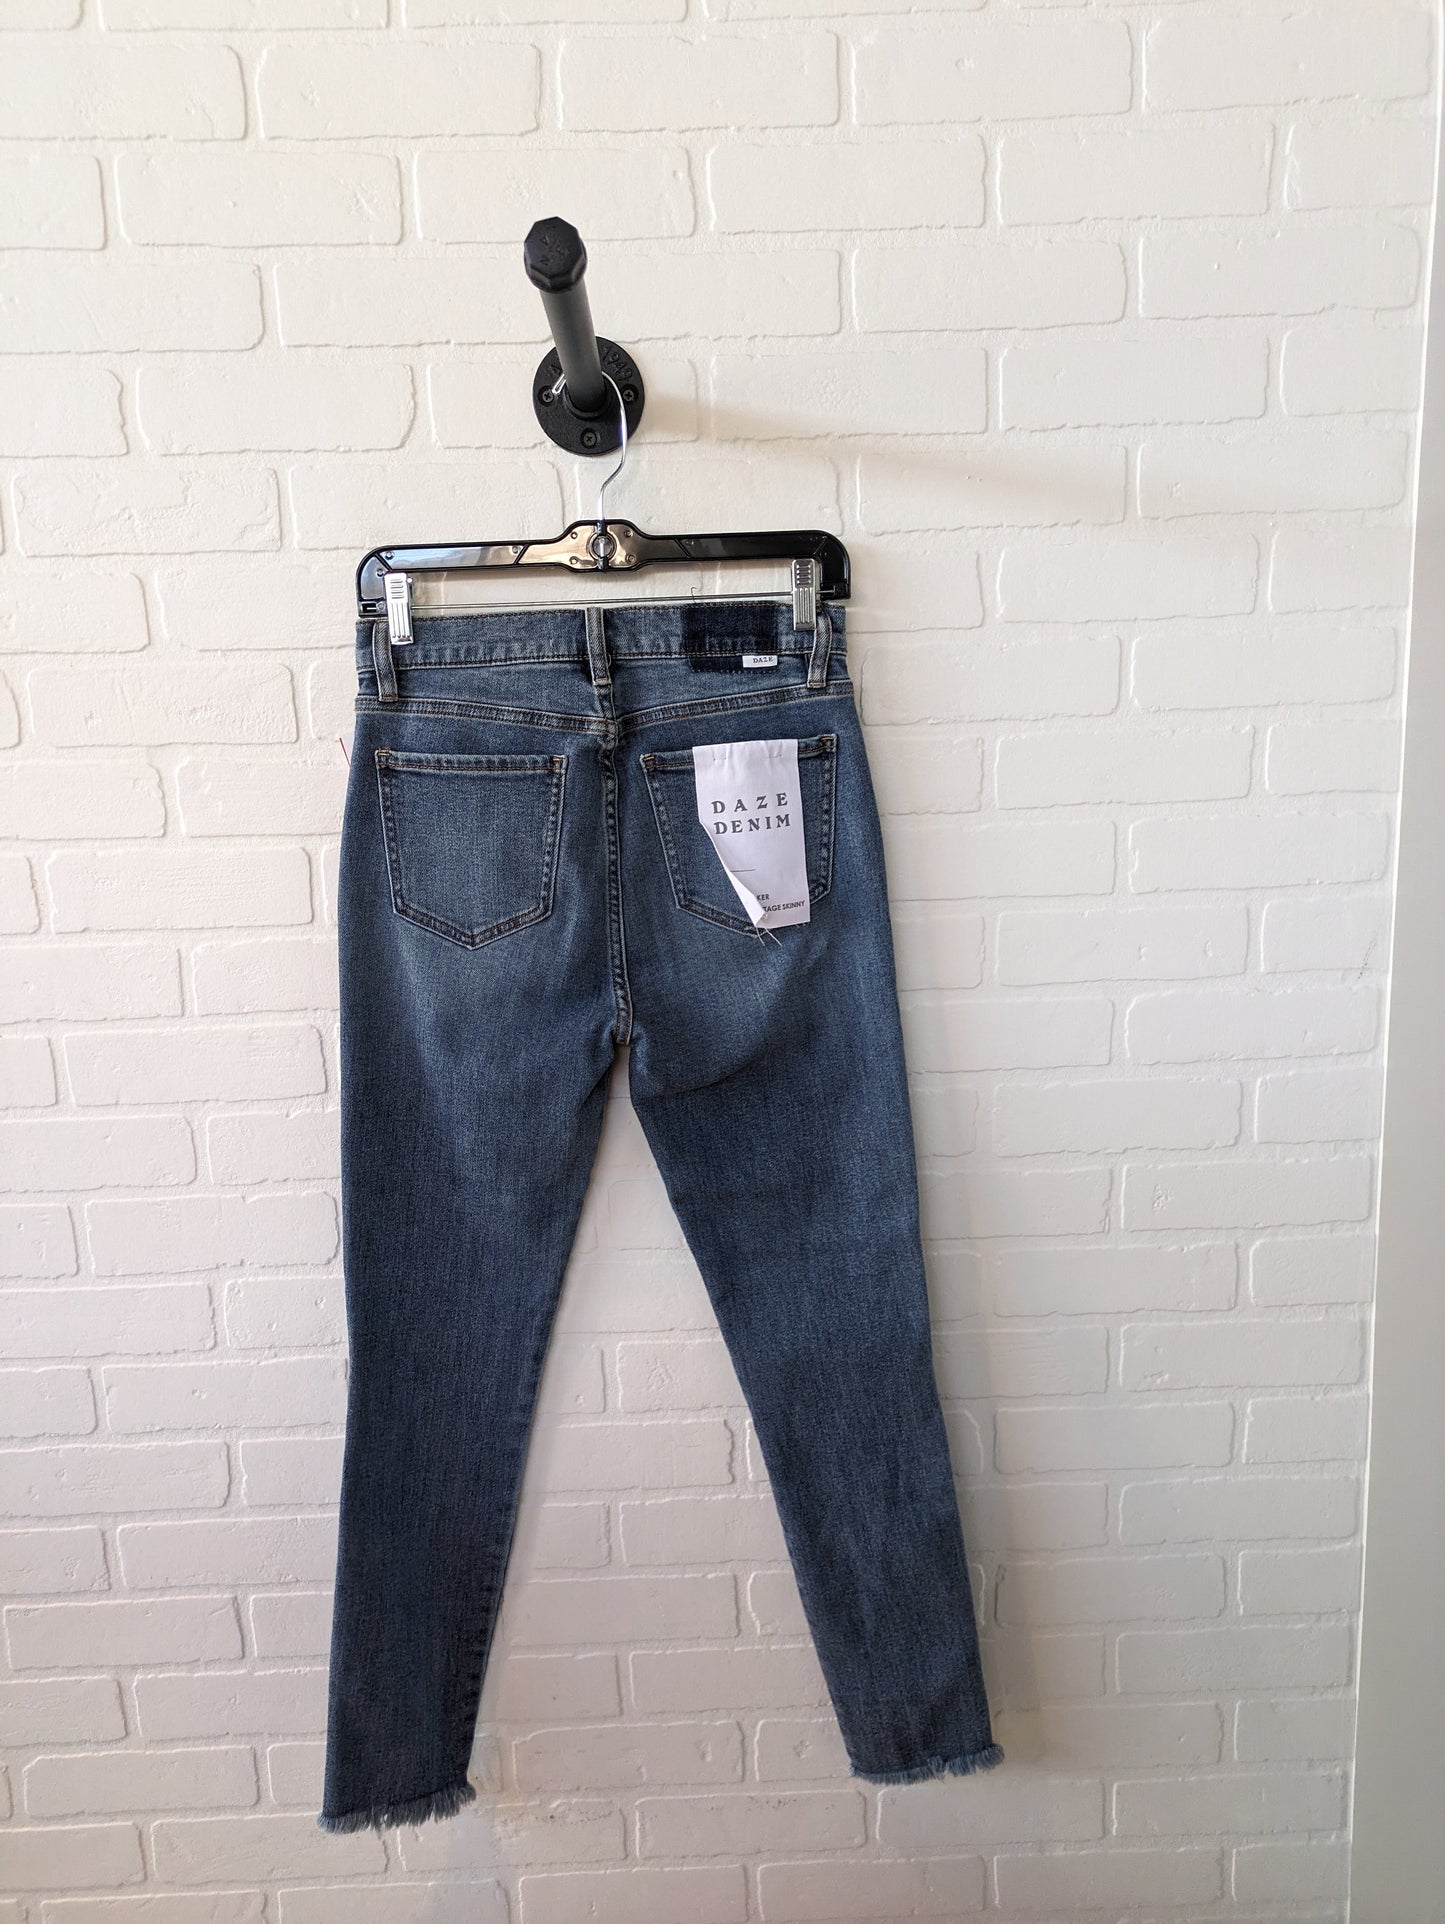 Jeans Skinny By Daze  Size: 4